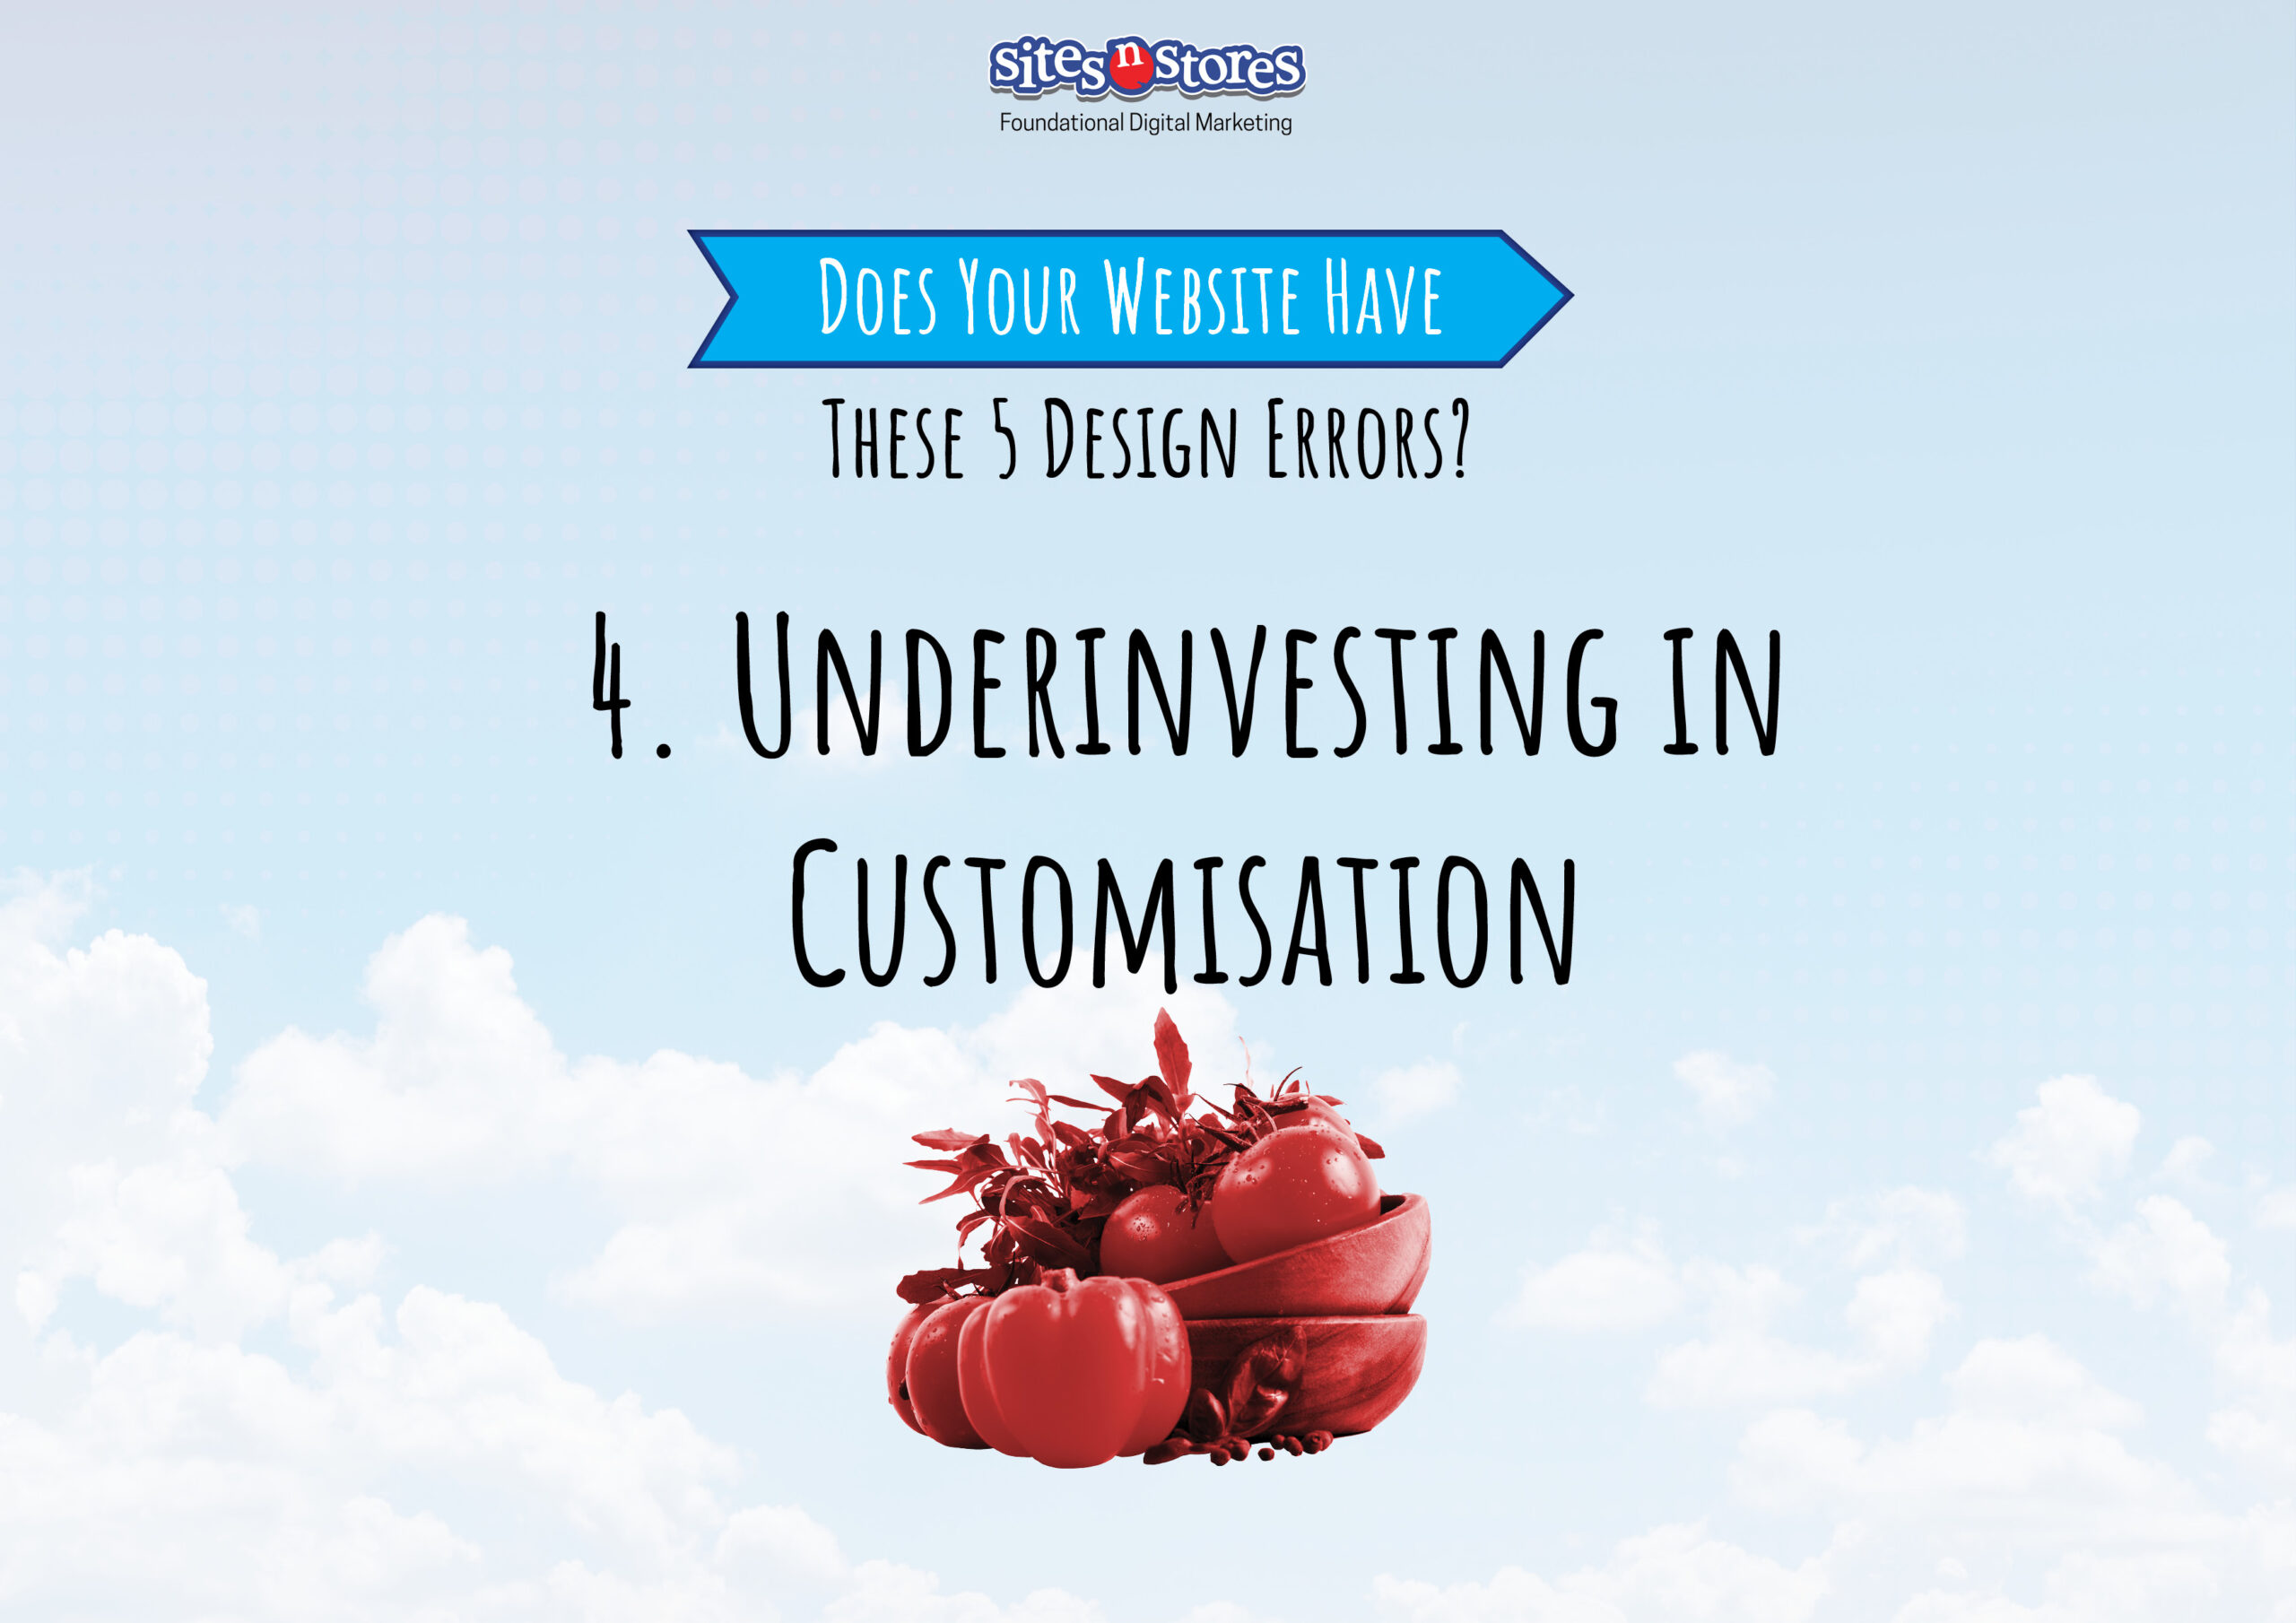 4. Underinvesting in Customisation